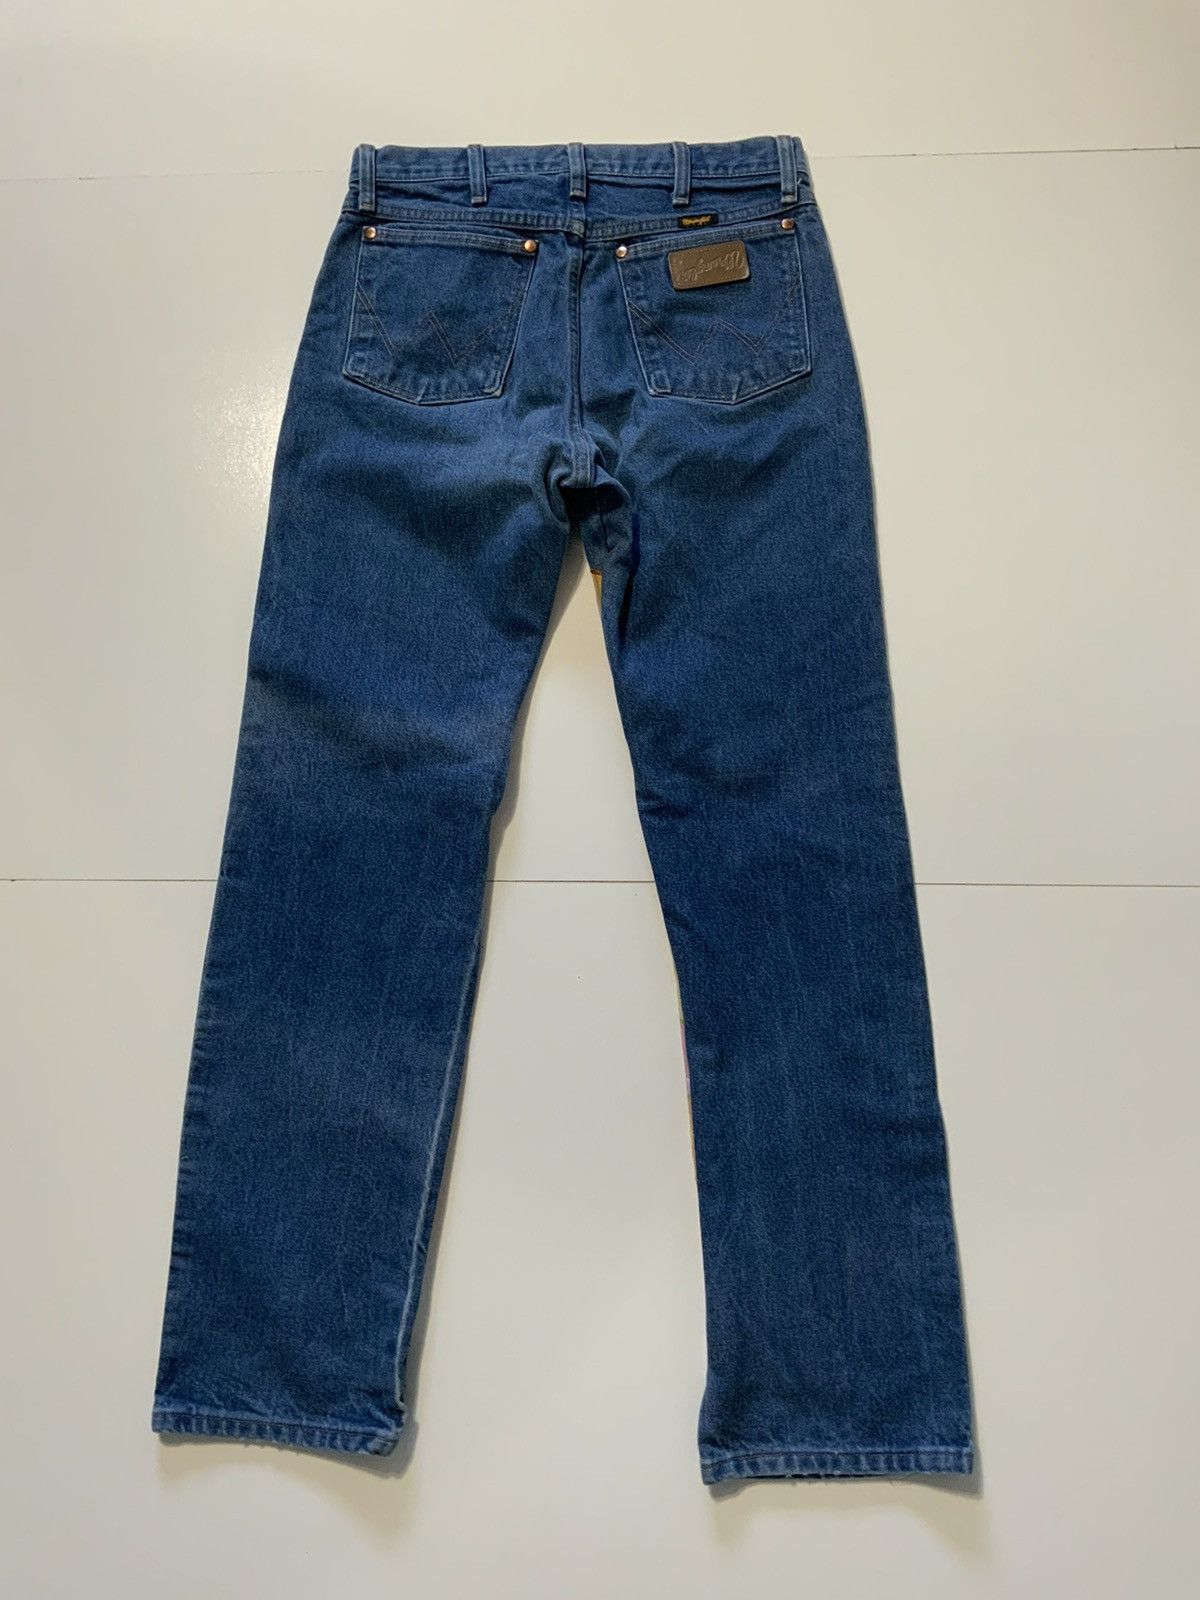 Vintage Vintage Reworked Peter Max Chaps Art Denim Patchwork Jeans Size US 31 - 2 Preview